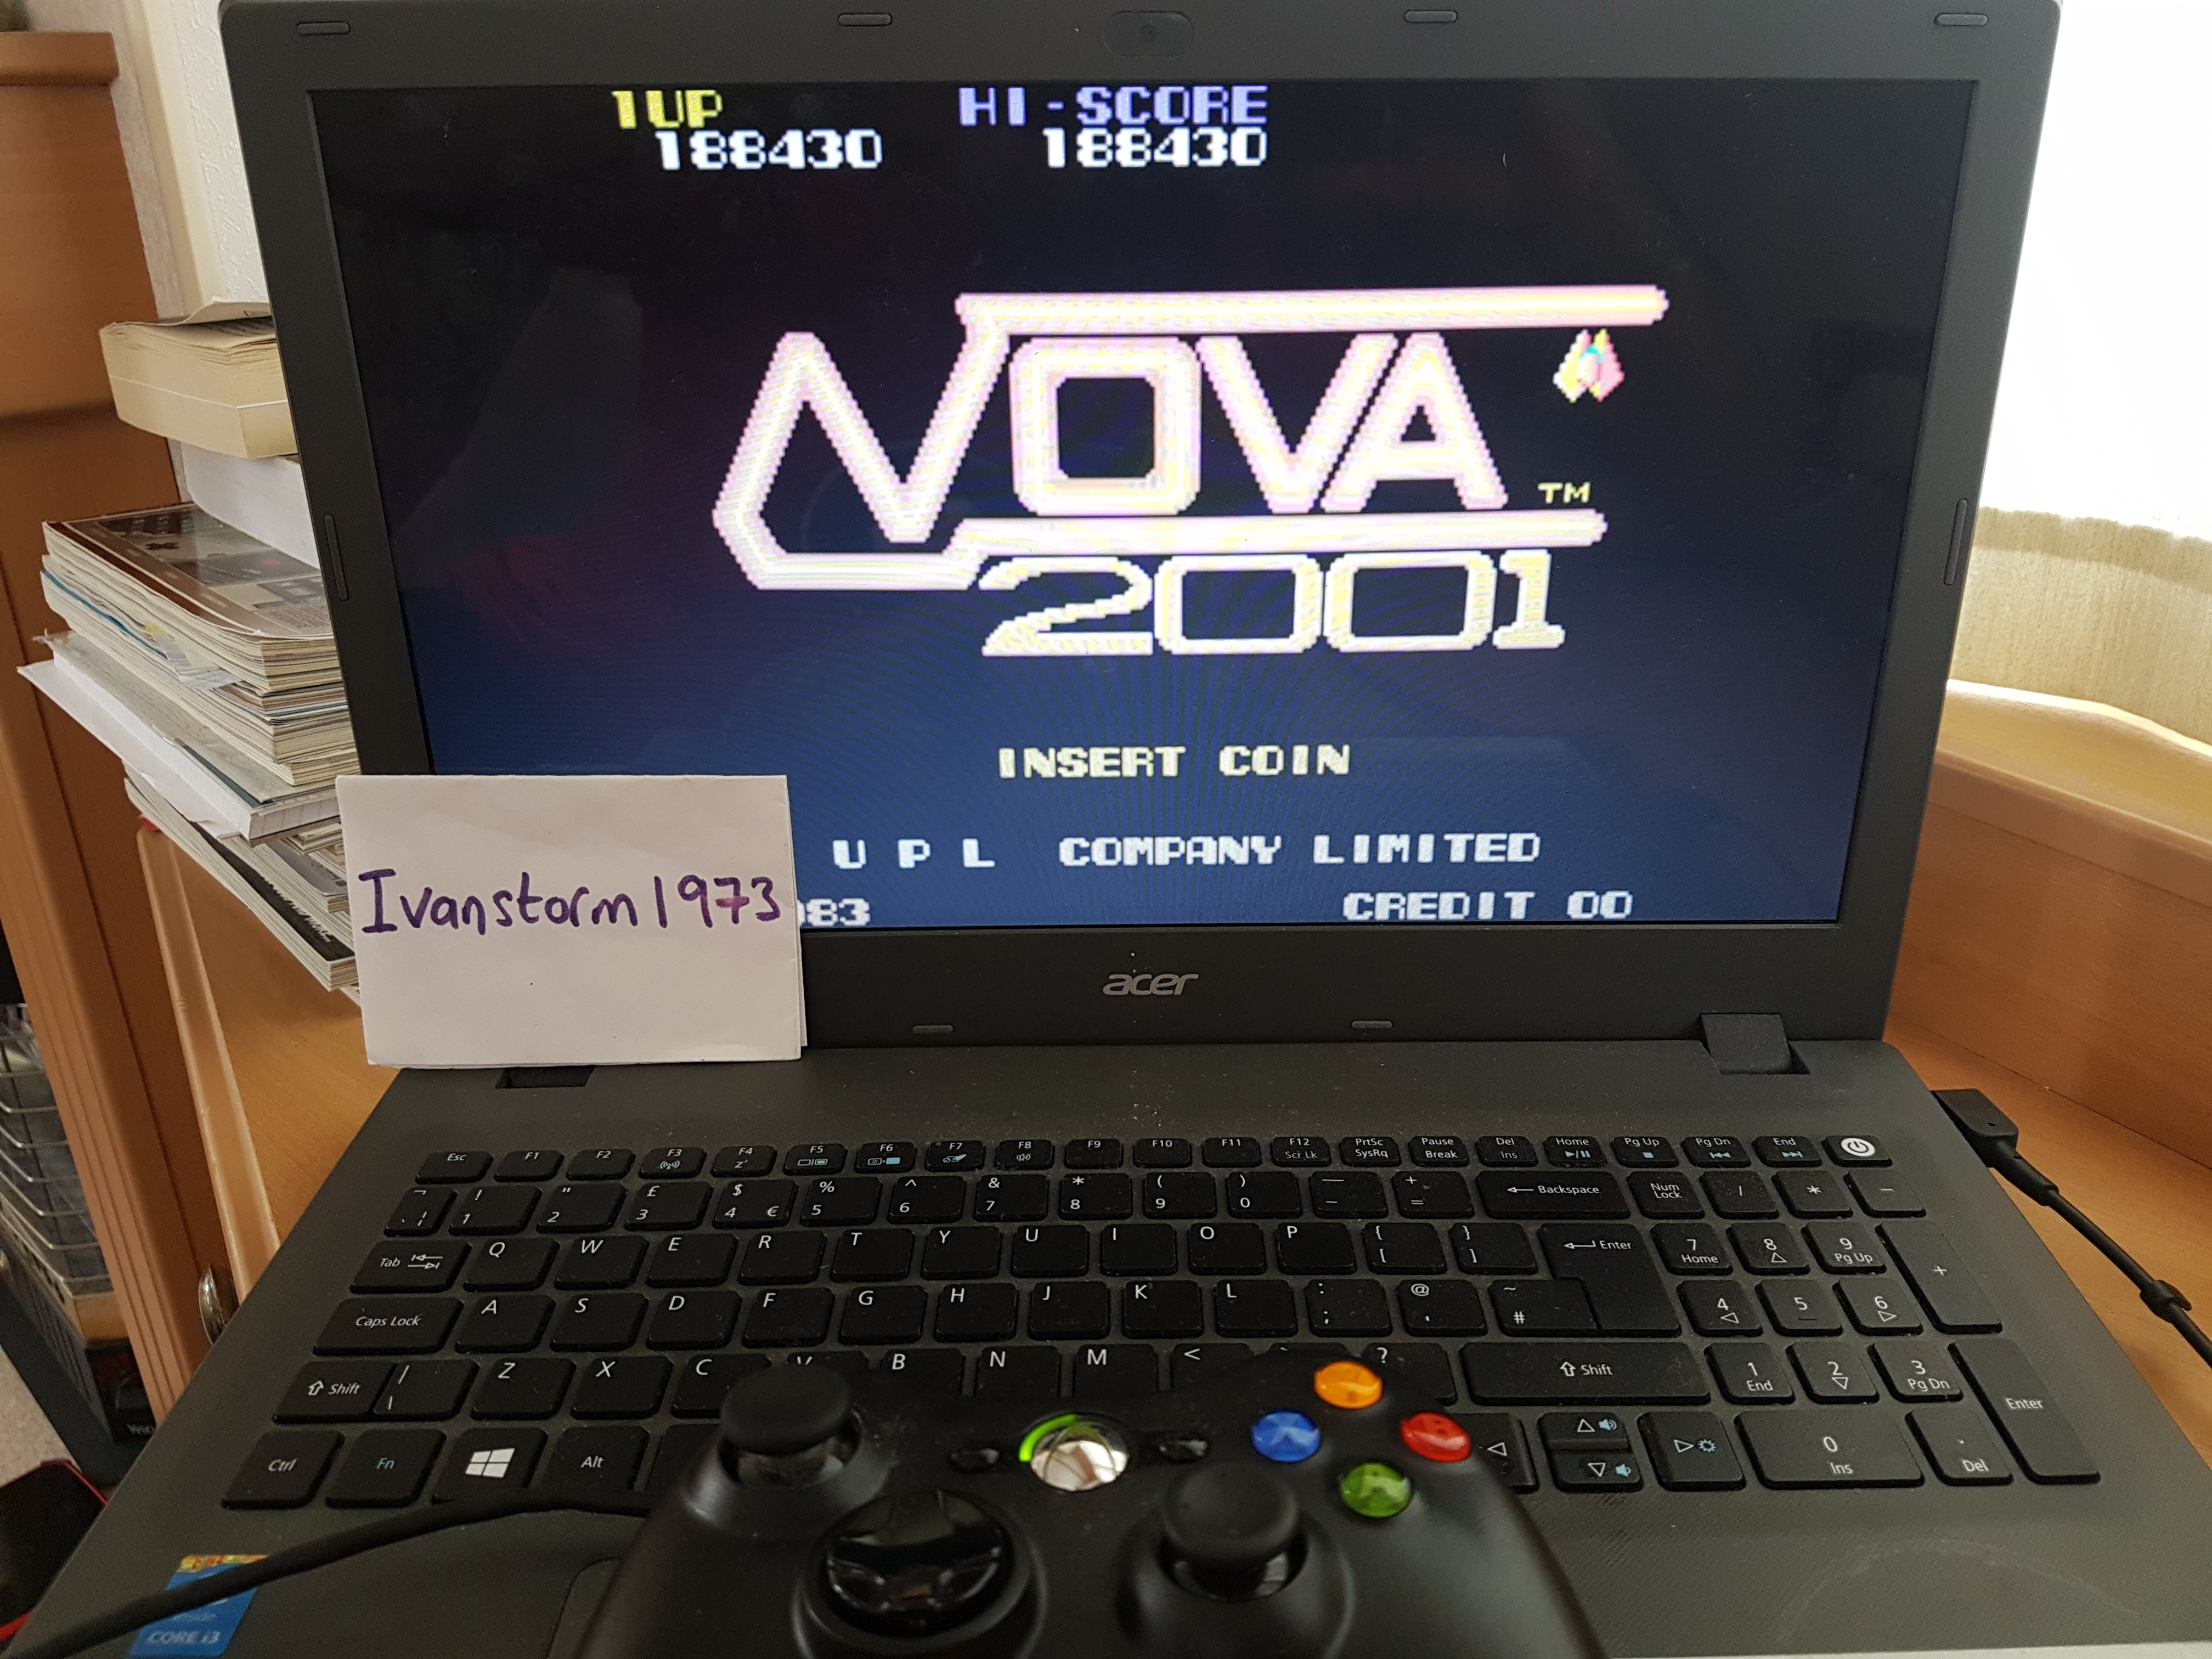 Ivanstorm1973: Nova 2001 (Japan) [Nova2001] (Arcade Emulated / M.A.M.E.) 188,430 points on 2017-08-09 04:56:09